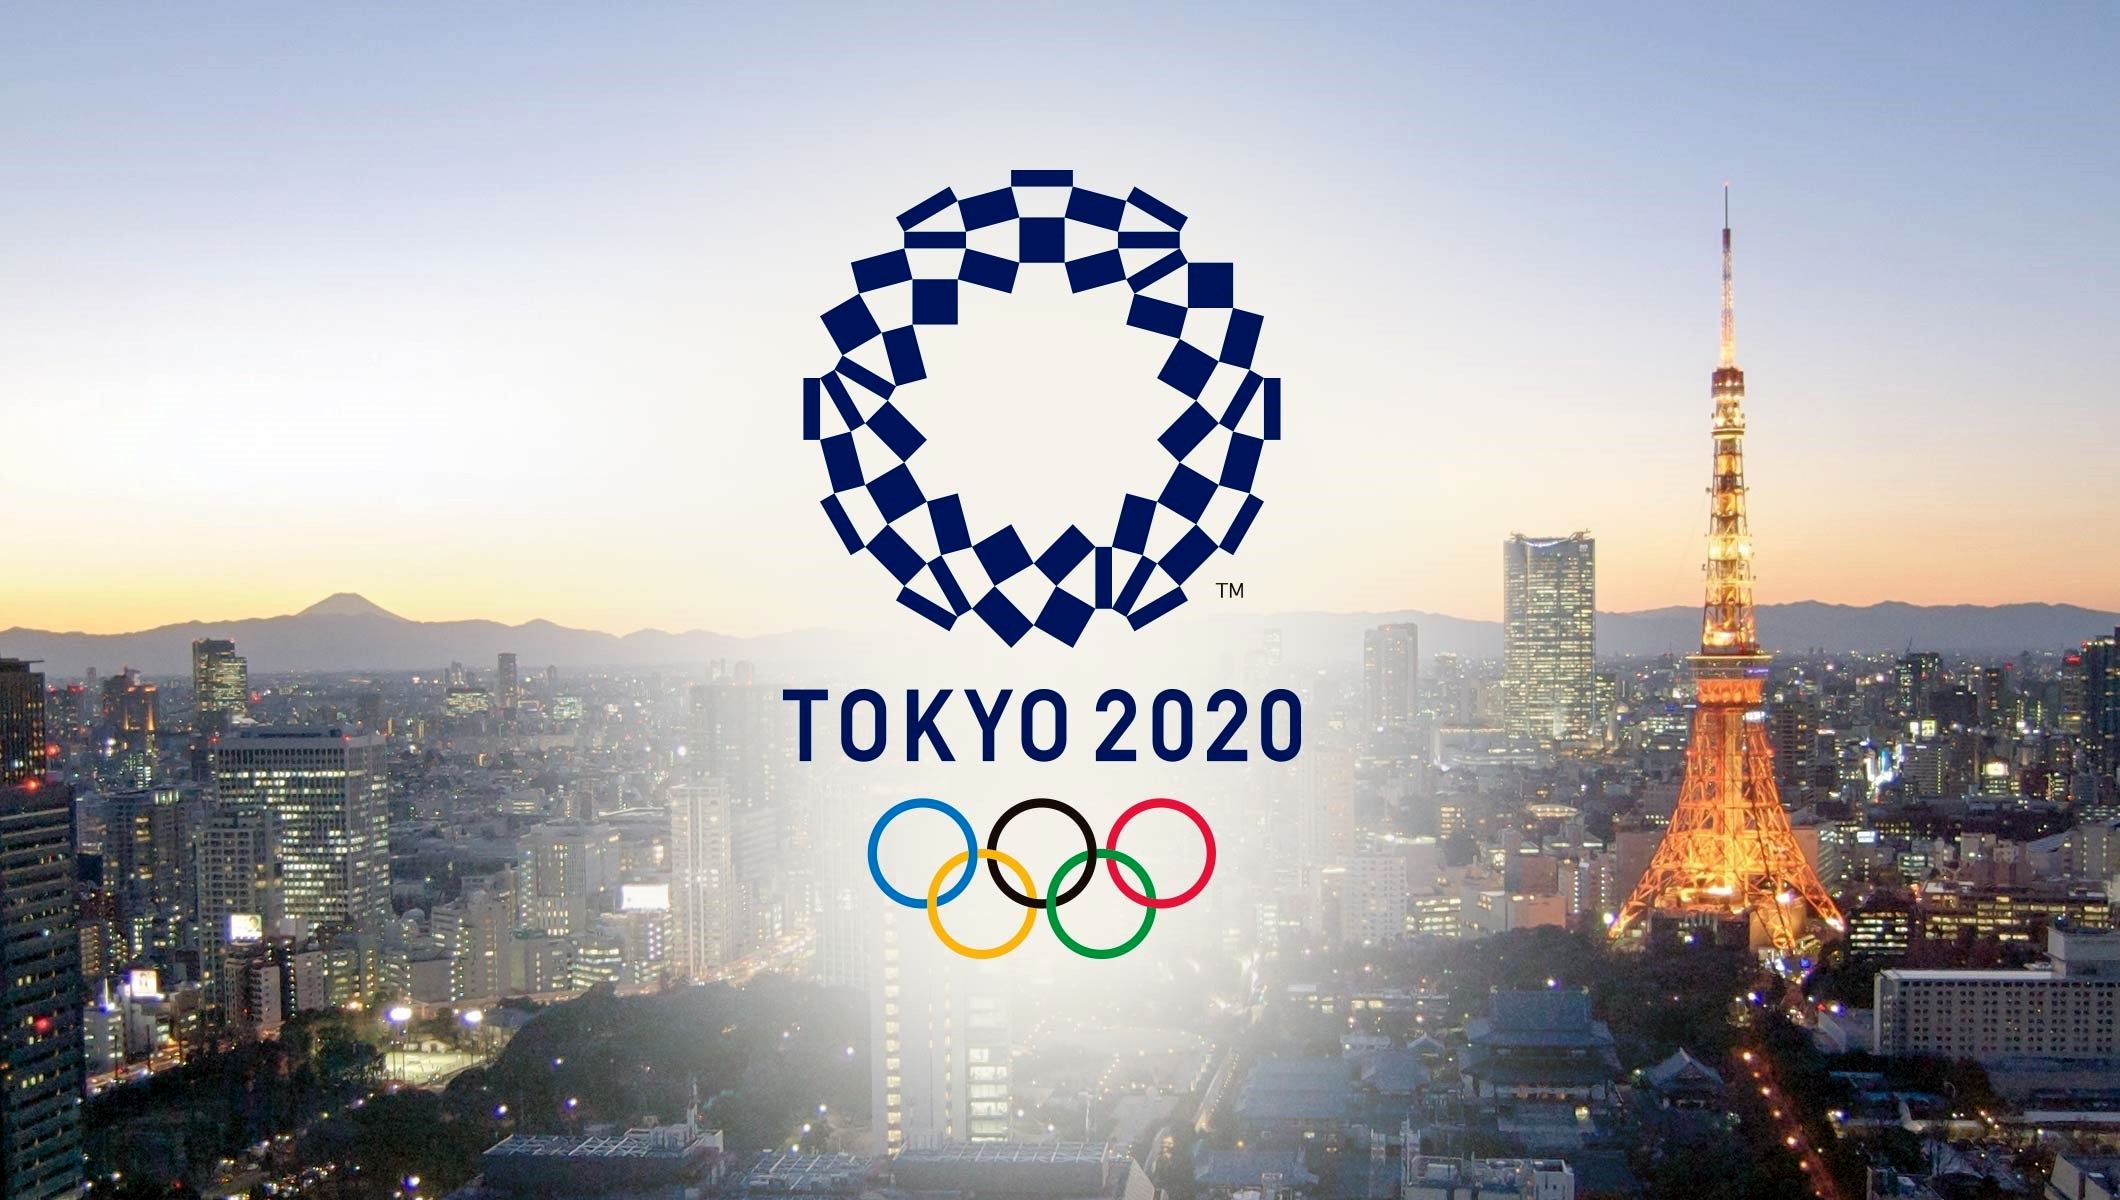 المپیک توکیو کی برگزار می‌شود؟